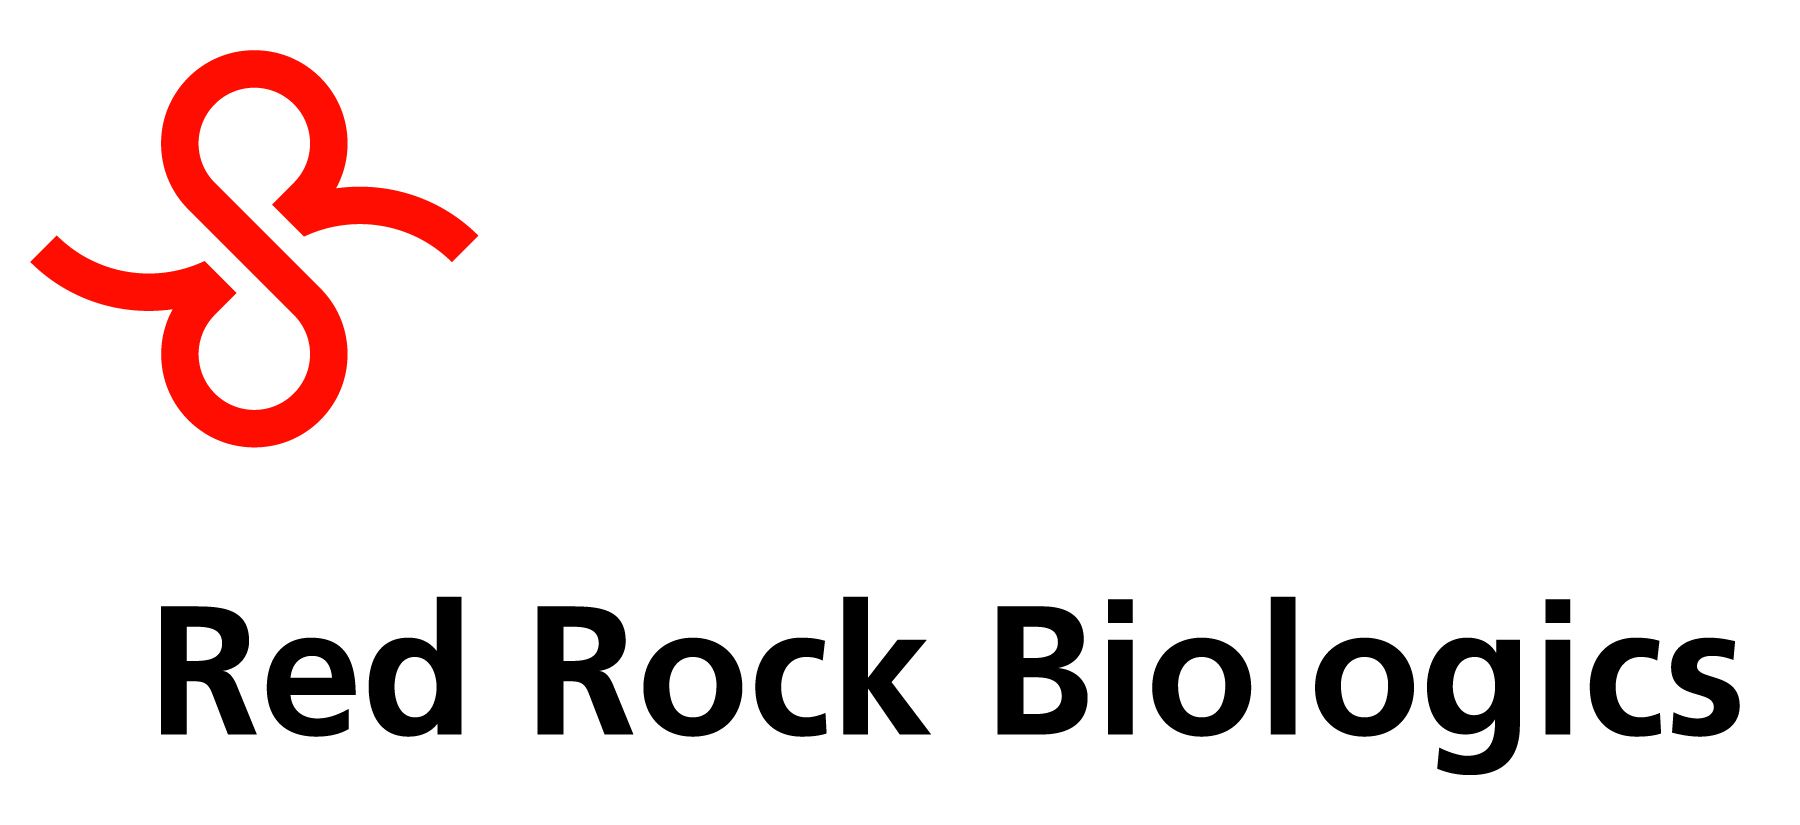 Red Rock Biologics